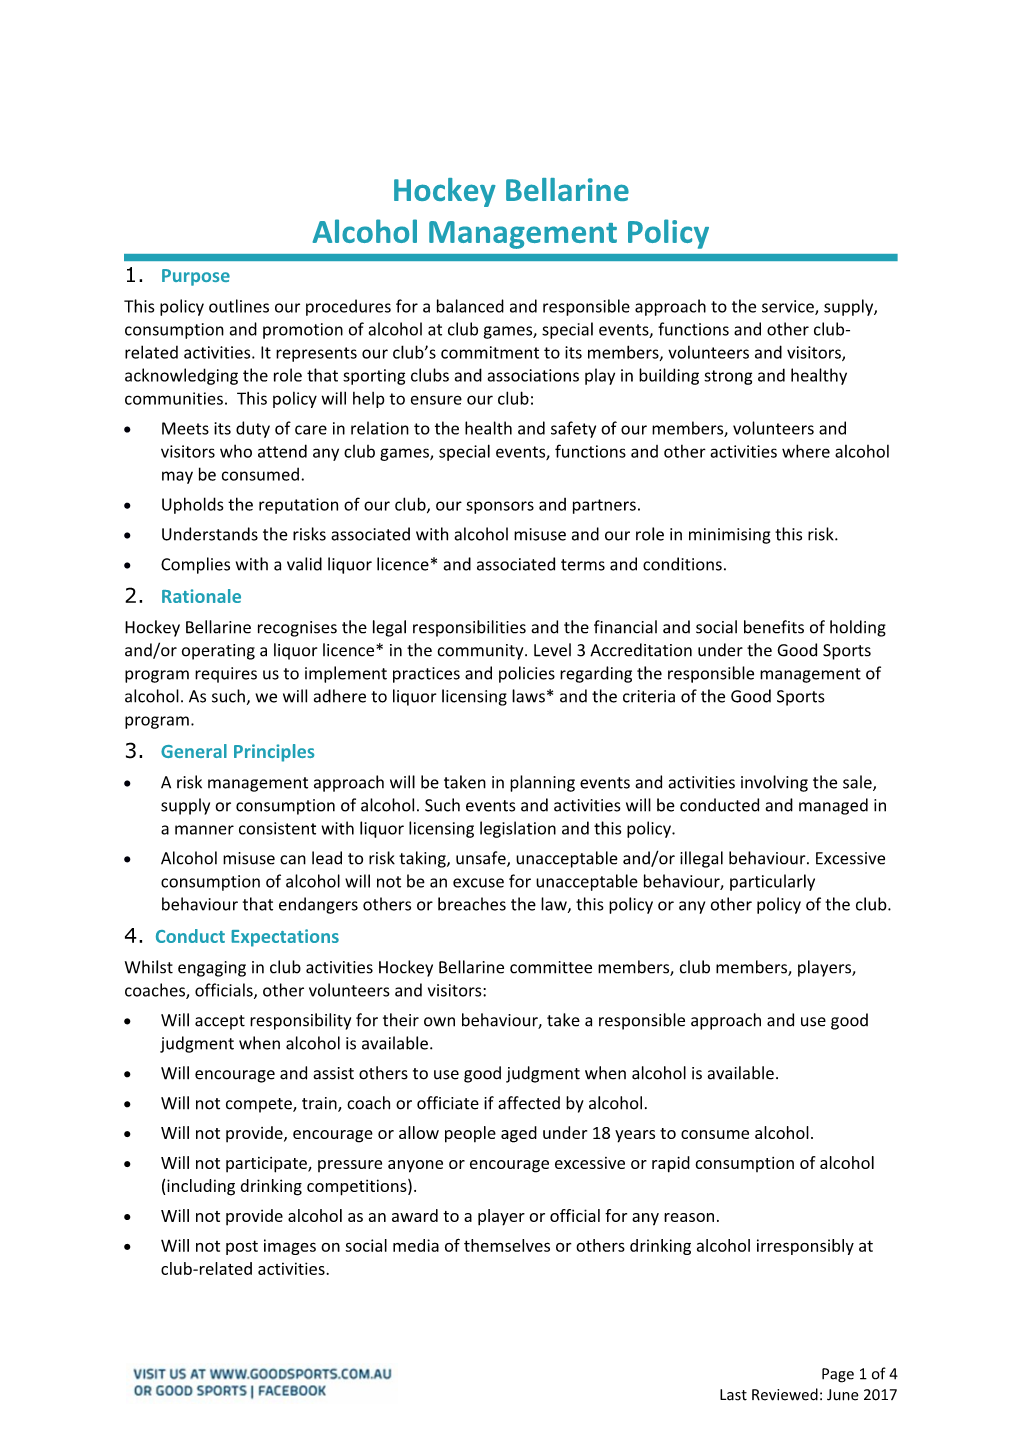 Hockey Bellarine Alcohol Management Policy